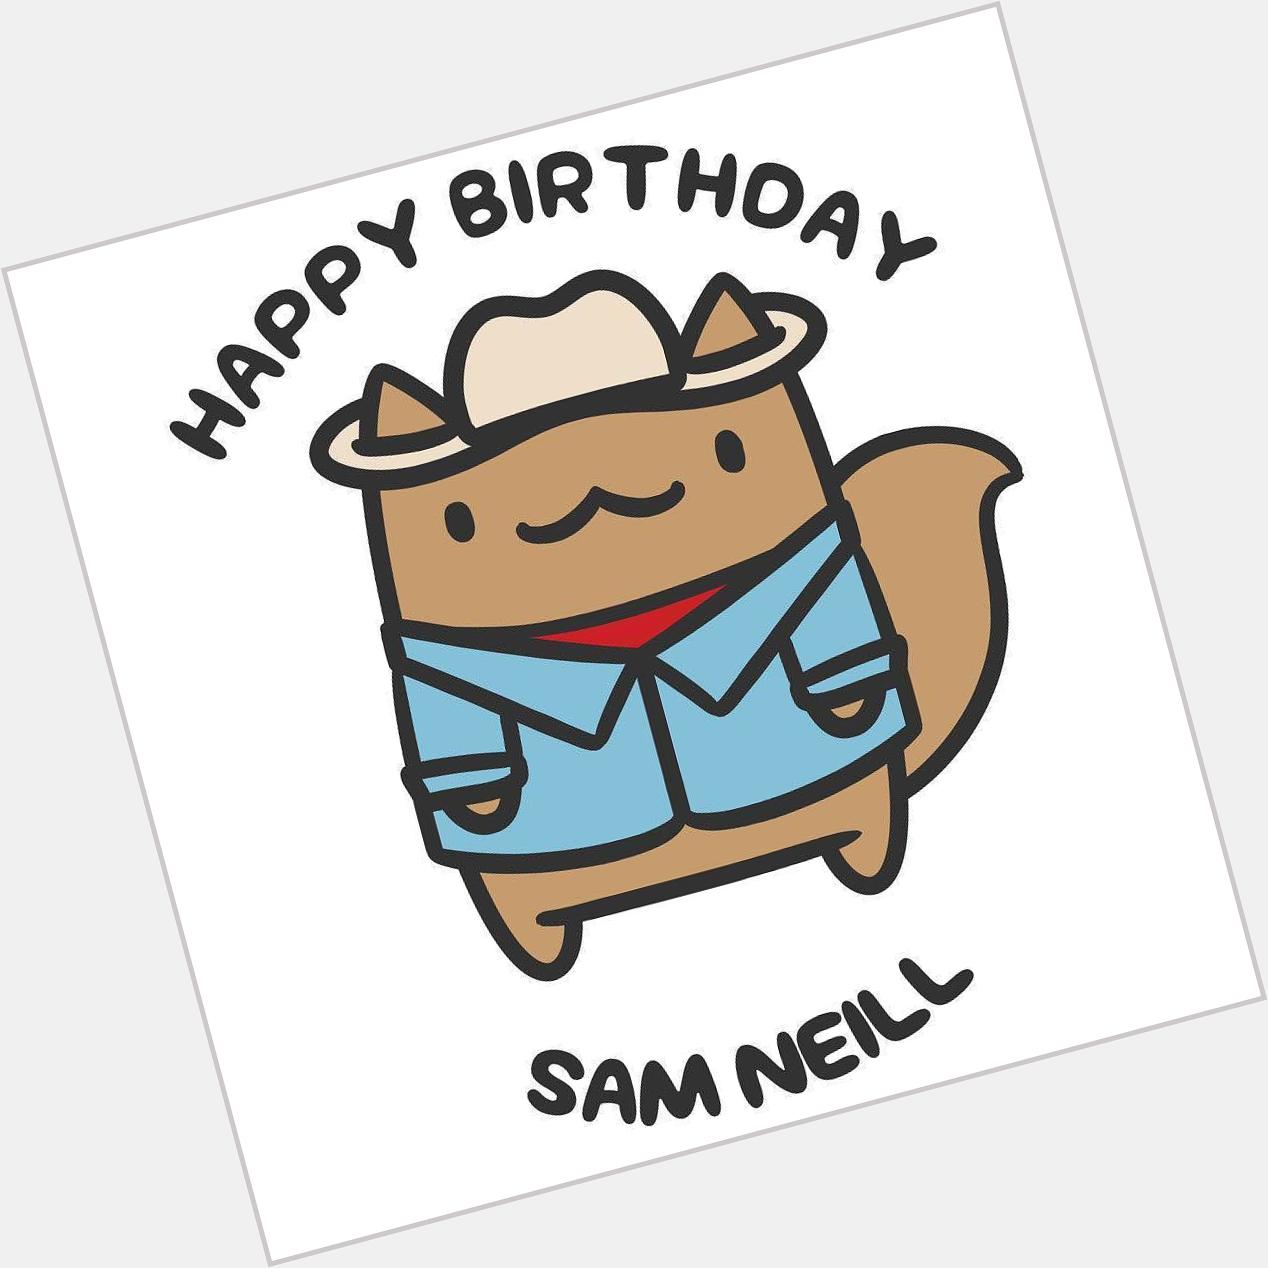 Happy Birthday, Sam Neill! You should probably watch Jurassic Park tonight cuz it\s the be 